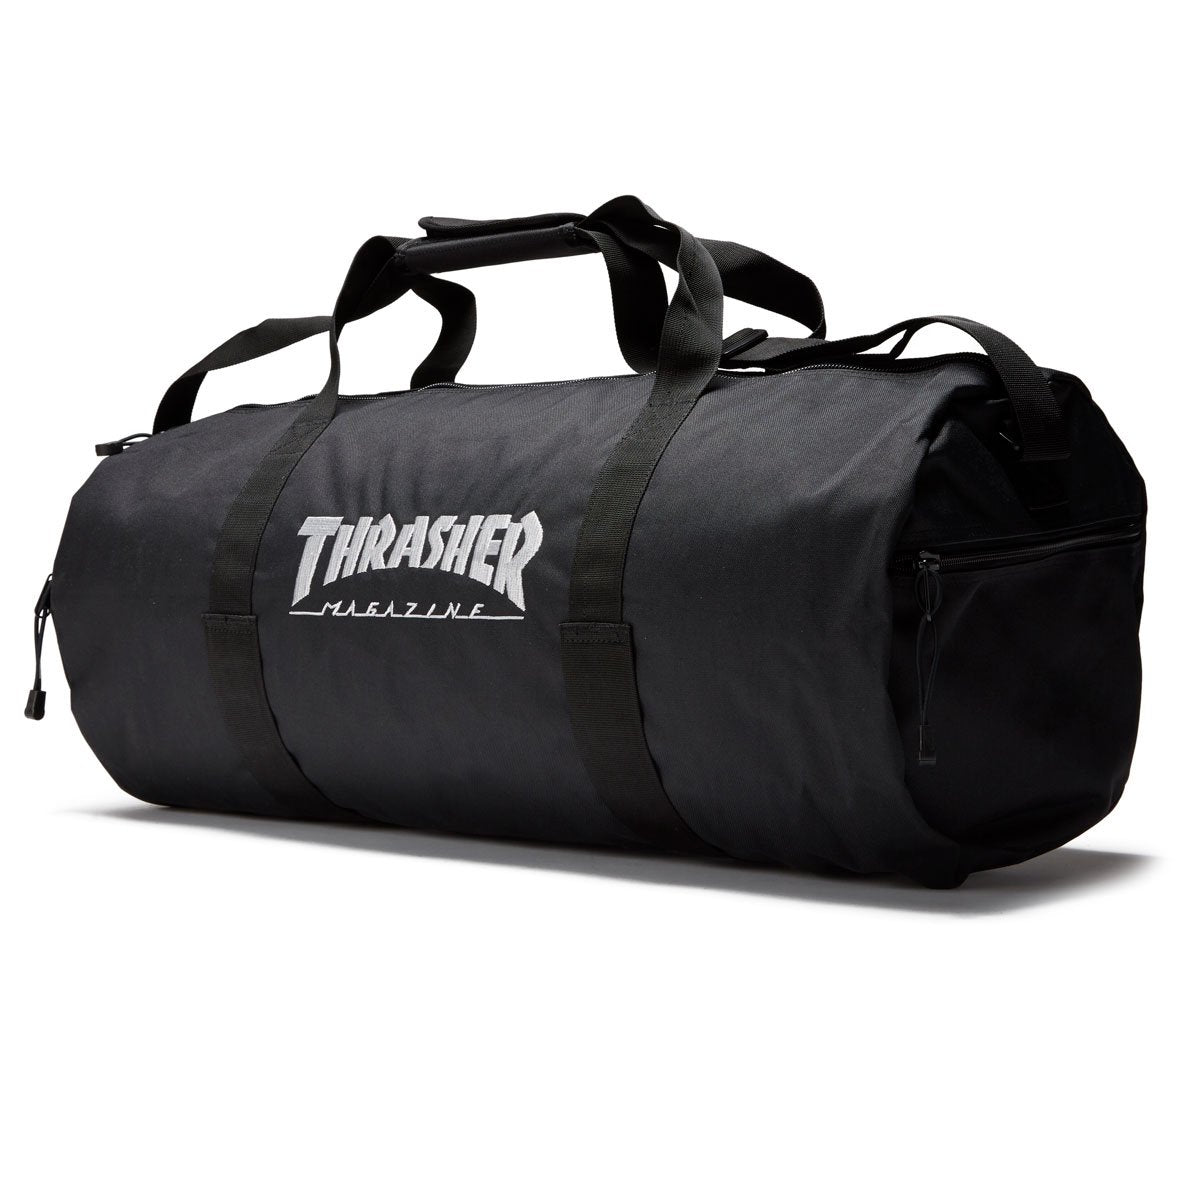 Thrasher Logo Skate Duffle Bag - Black image 1